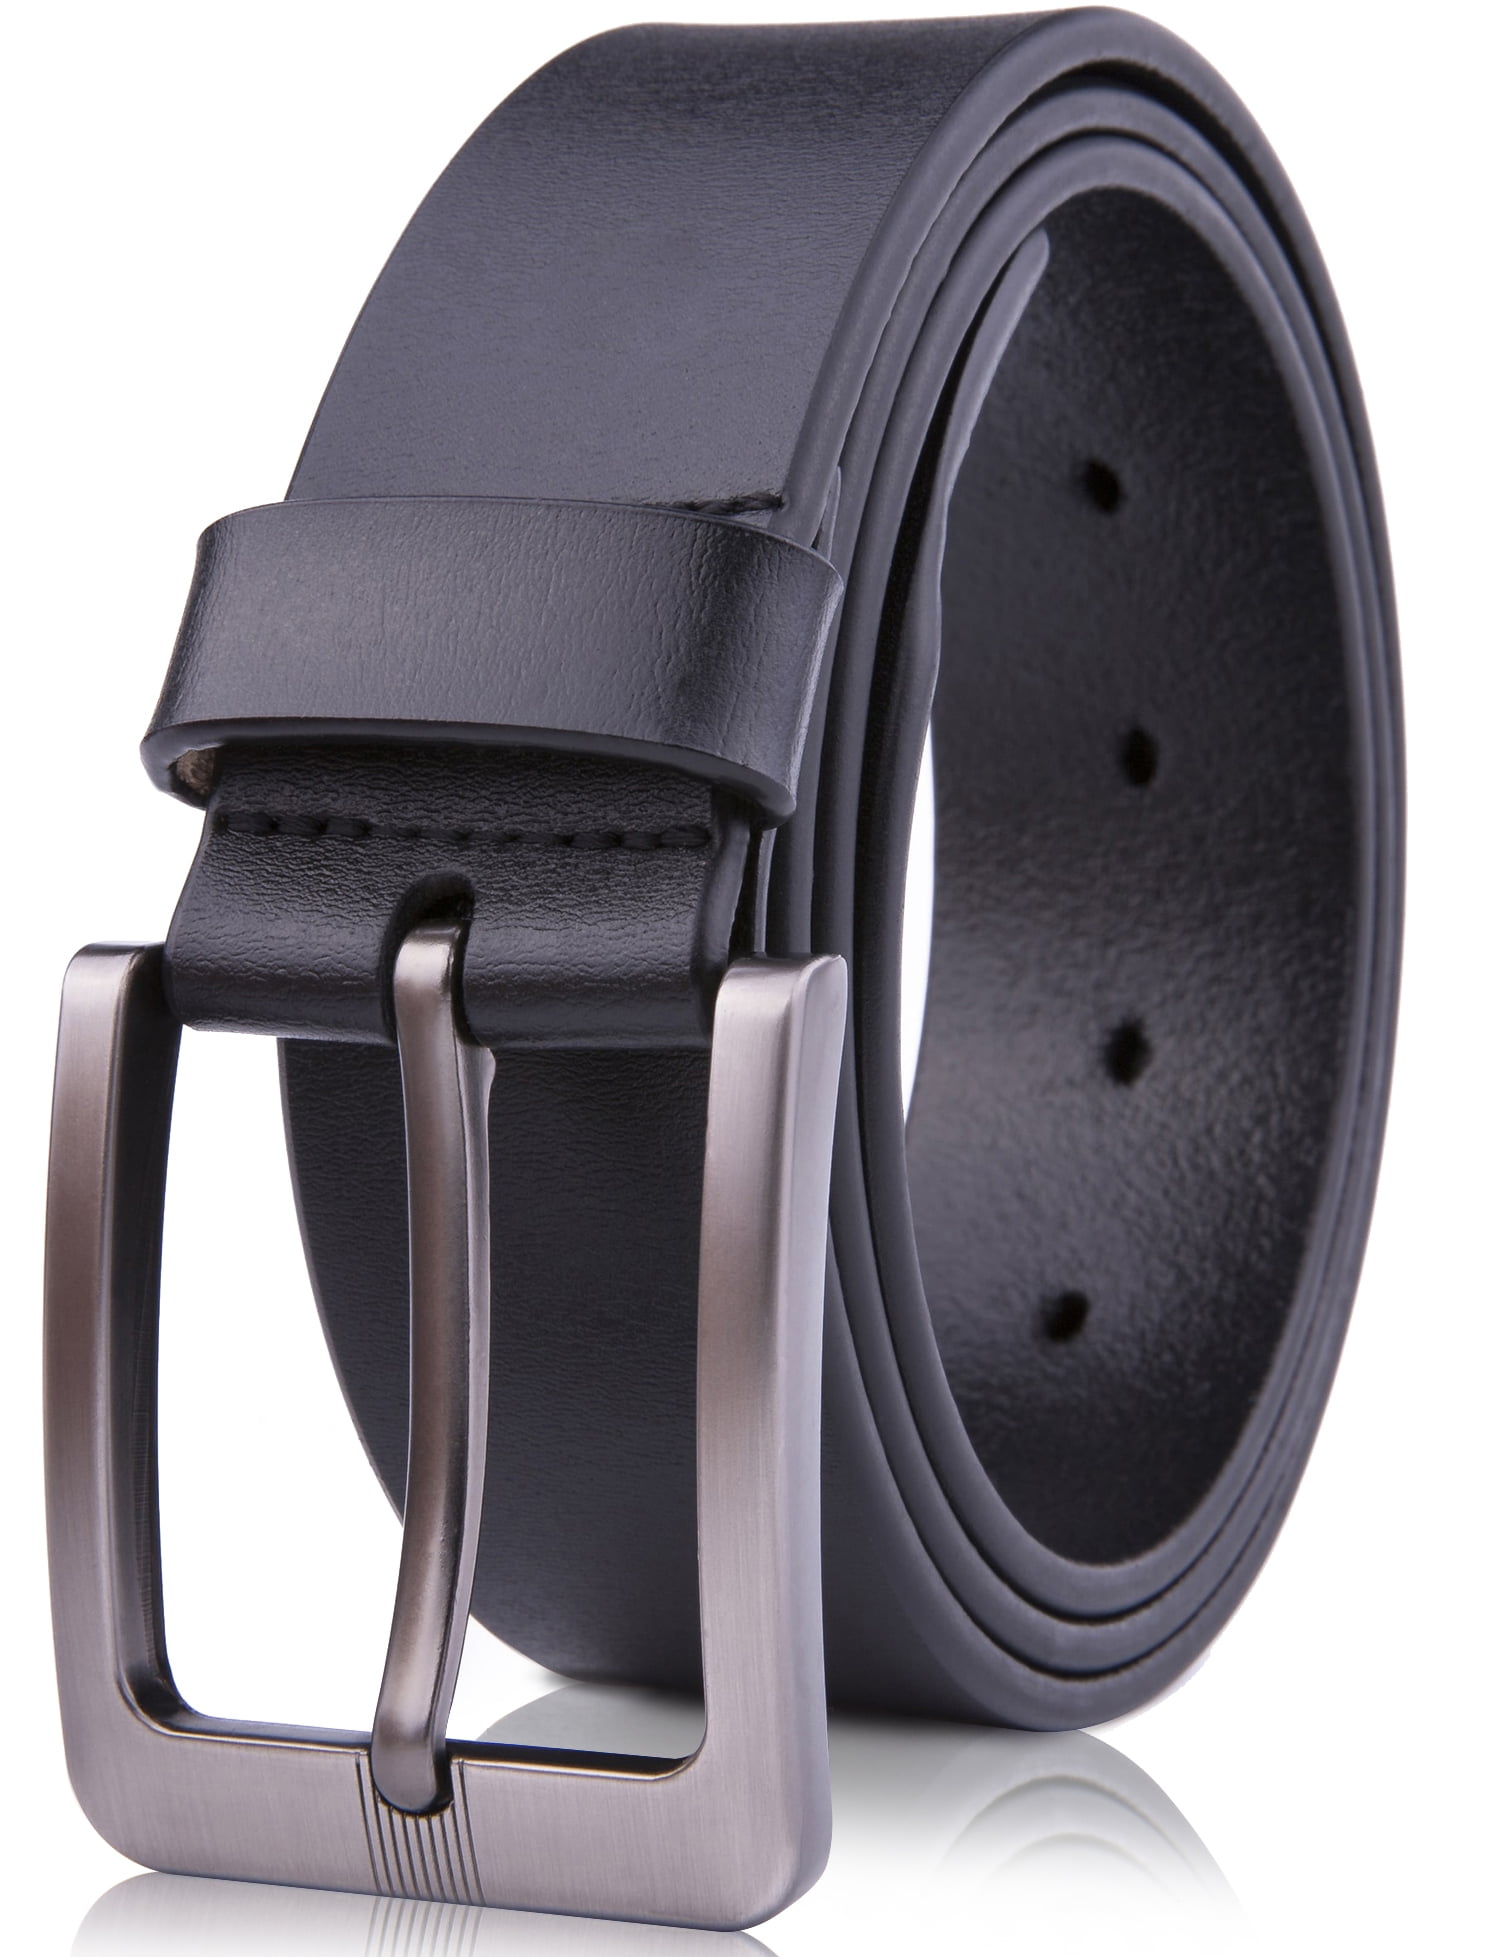 Habitaen Leather Belt For Men Without Buckle Waist Band Slide Automatic Lock 